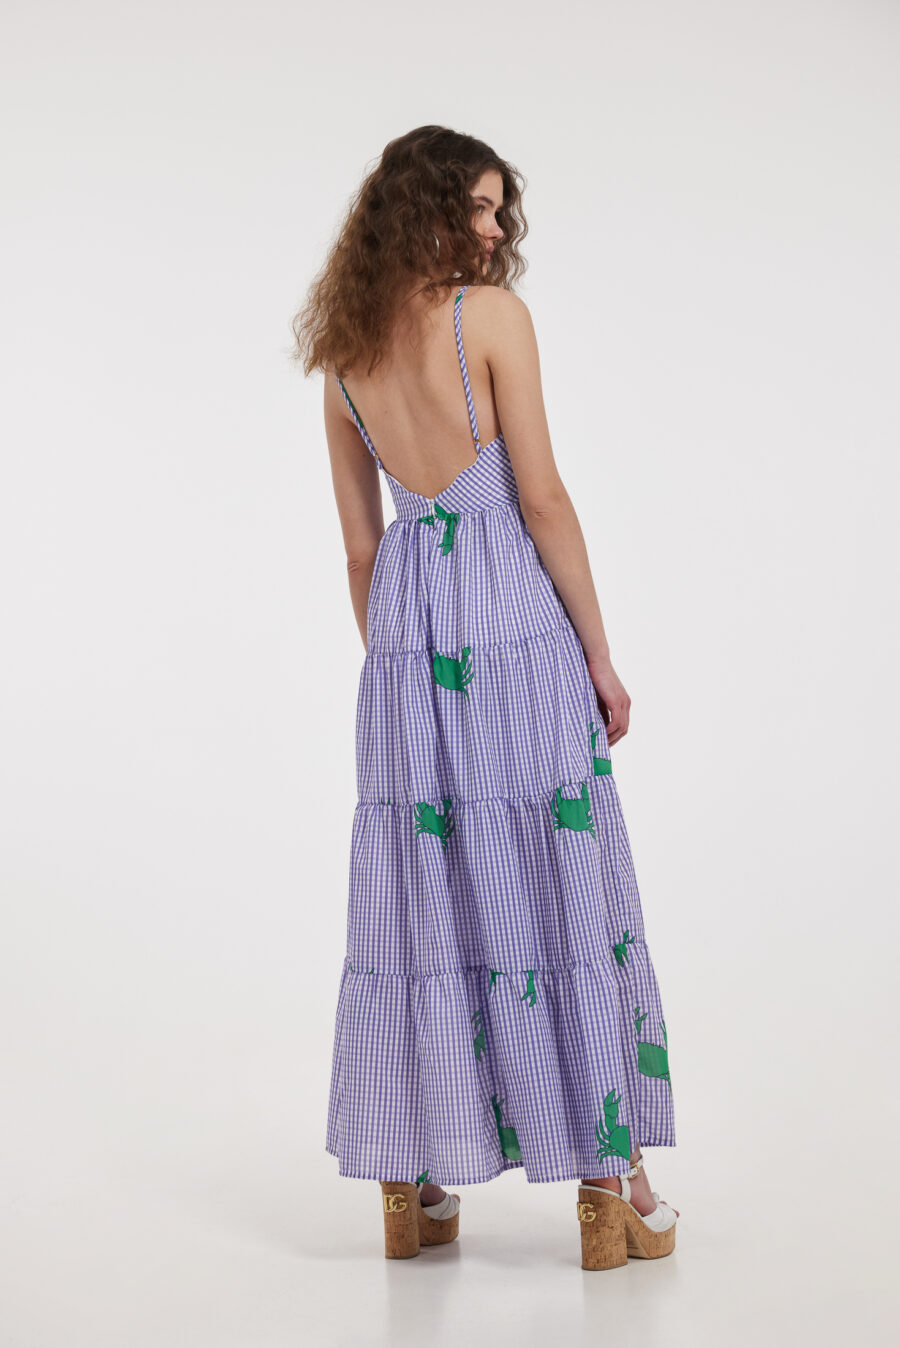 Hemithea Ether dress plaid purple